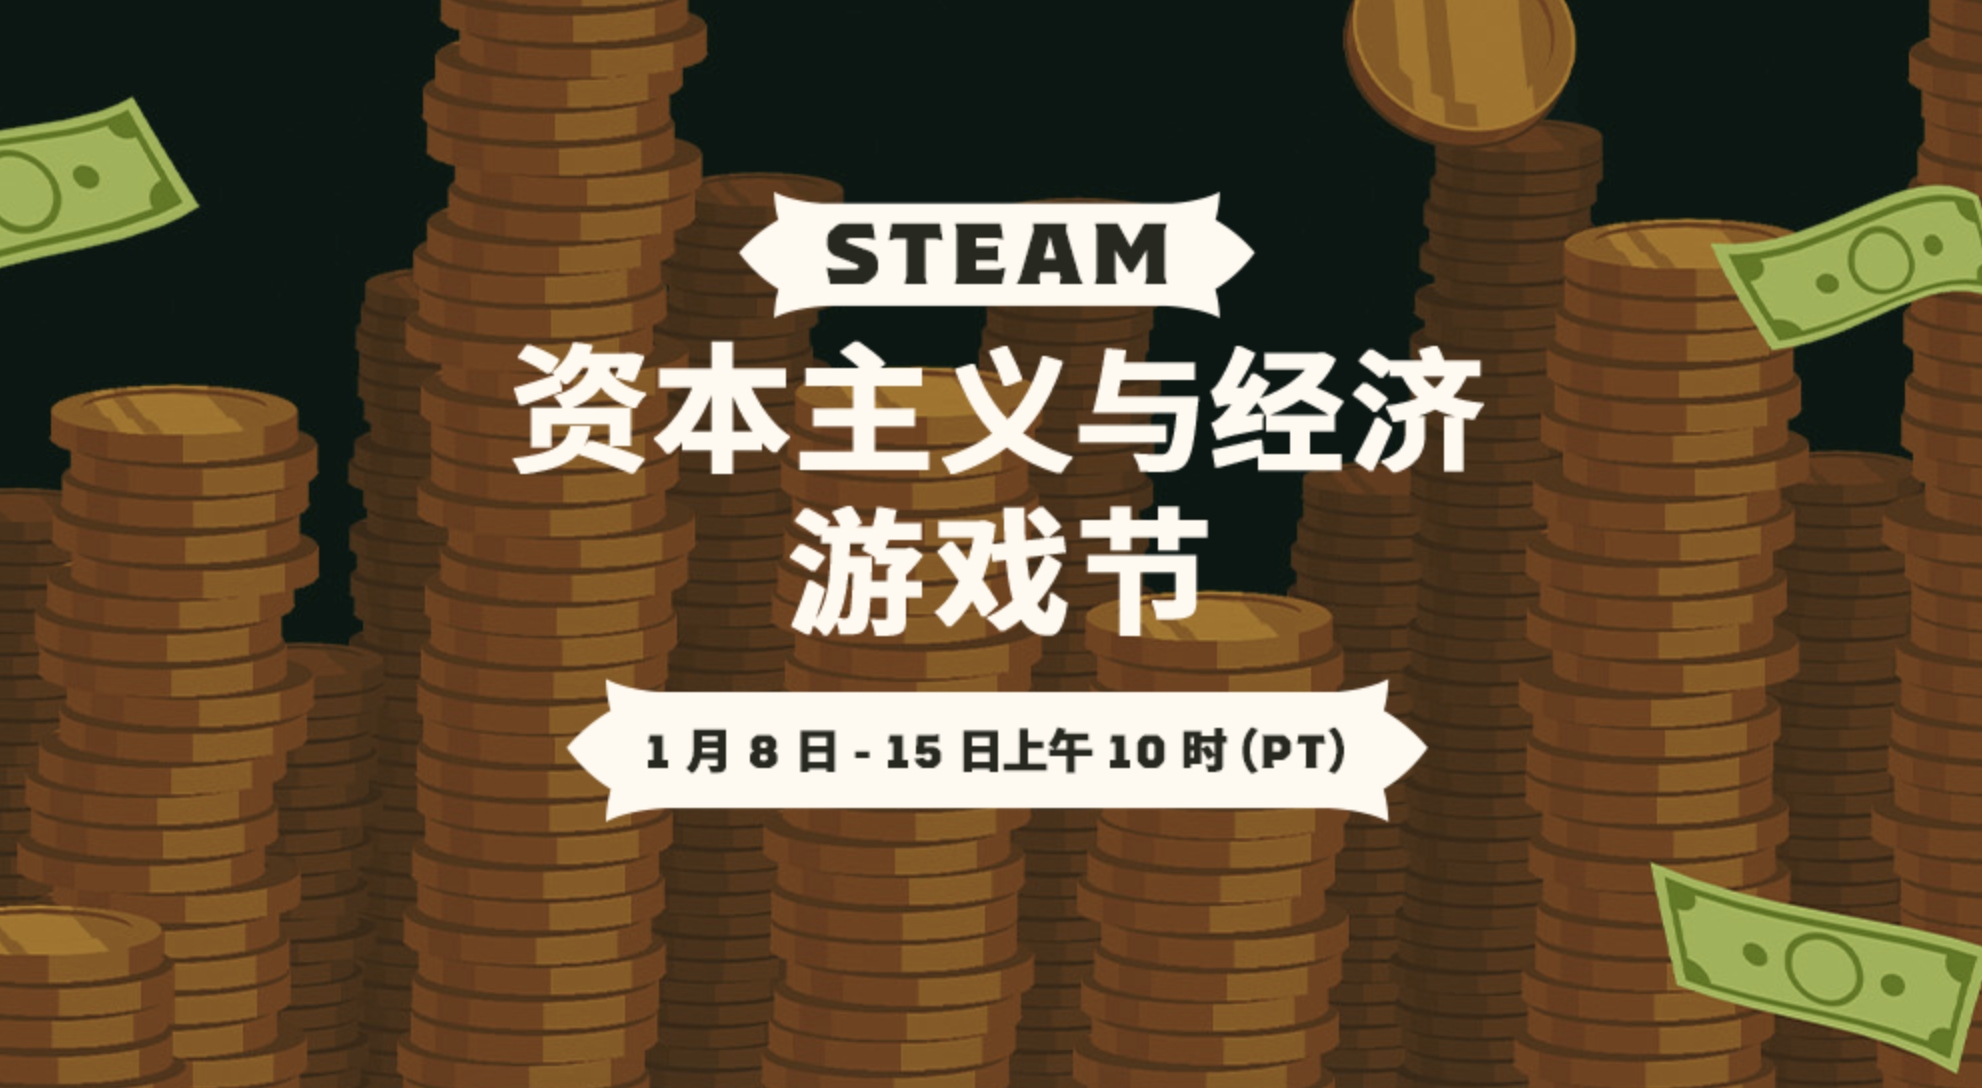 Steam开启「资本主义与经济游戏节」折扣